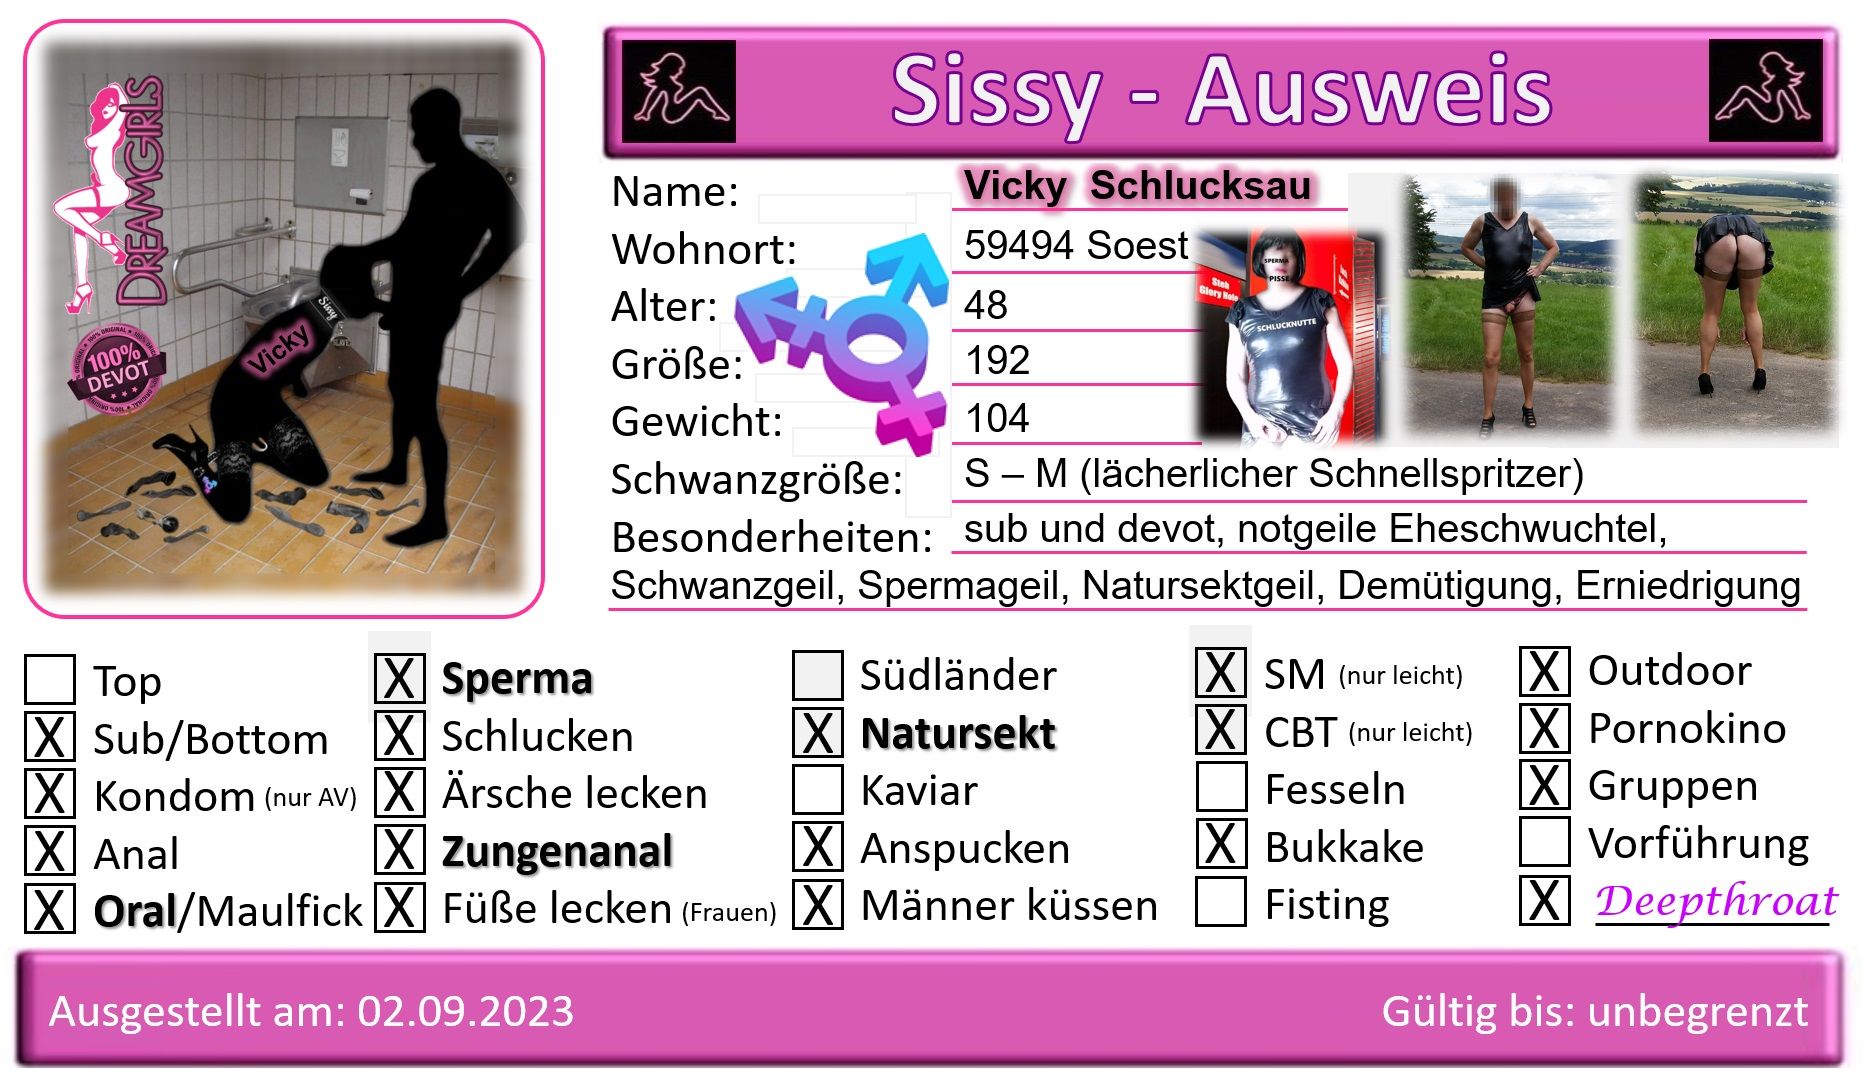 Sissy-Ausweis